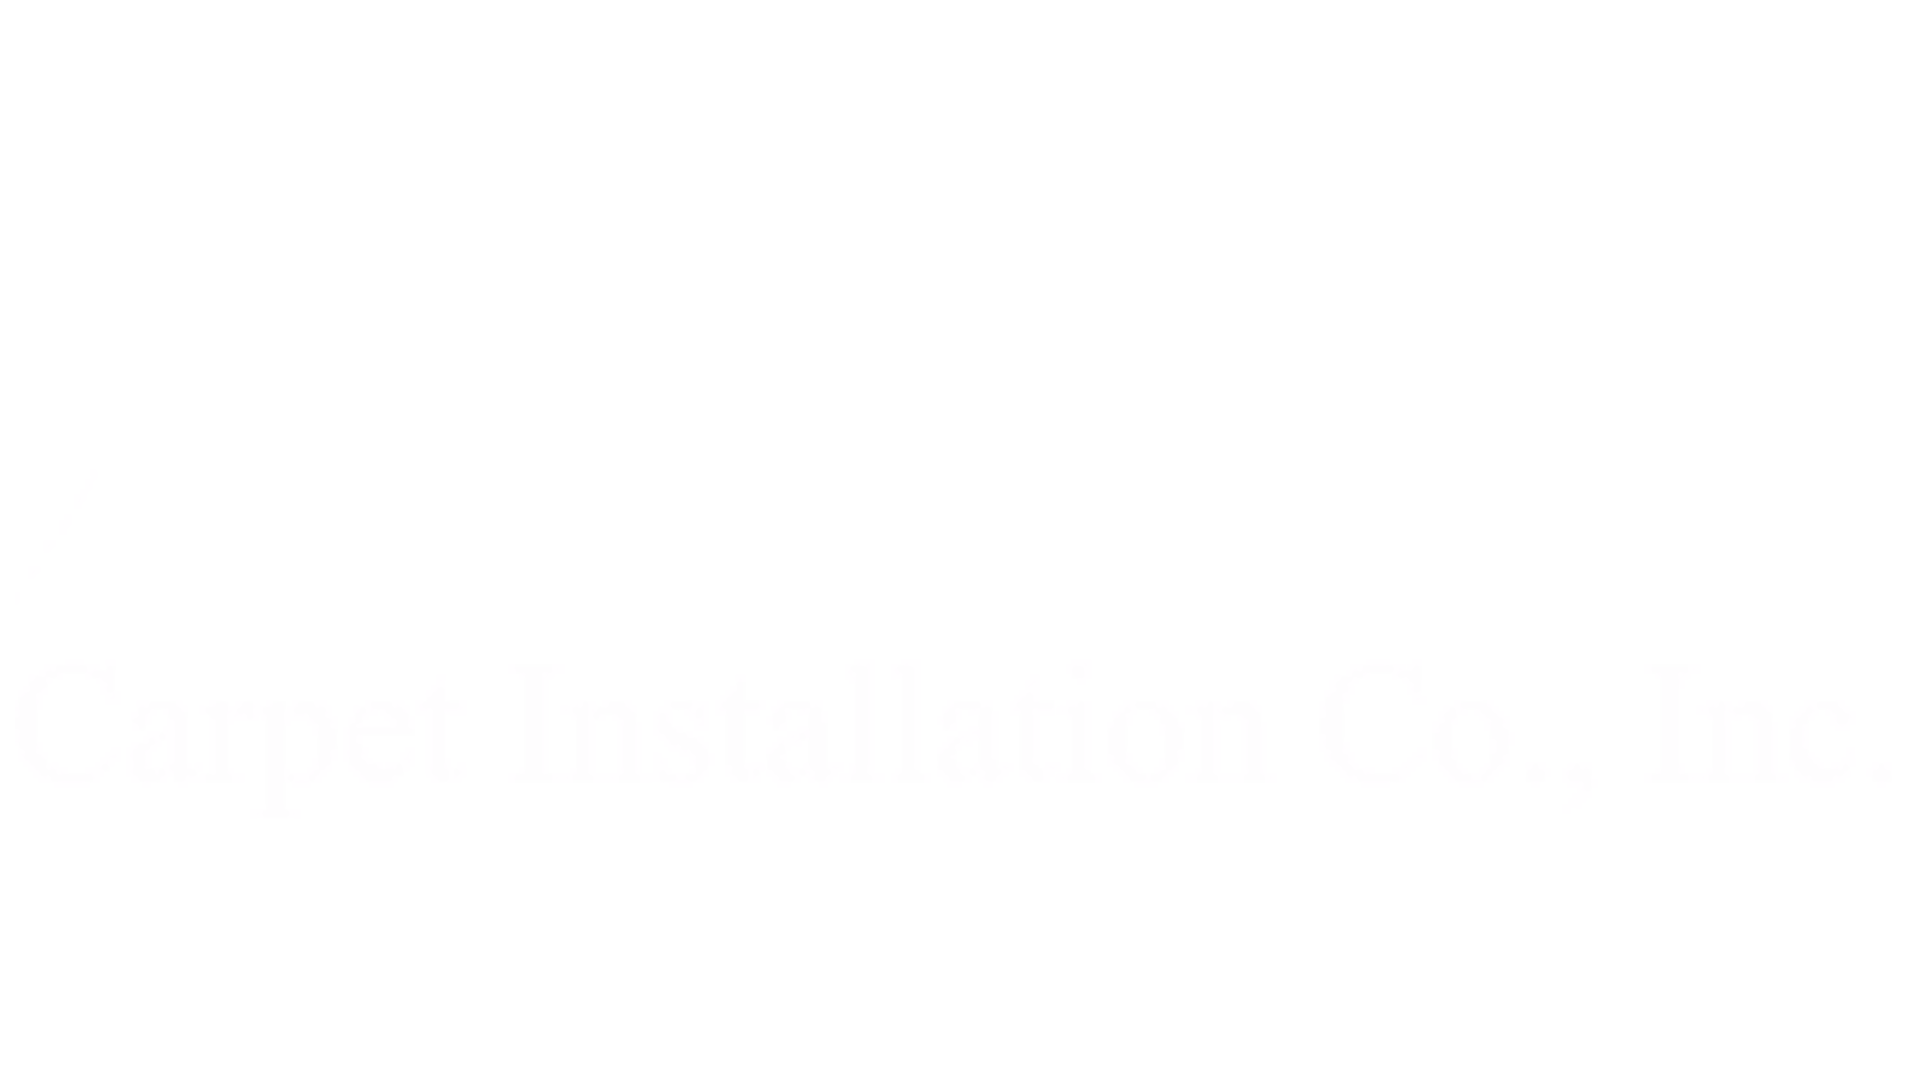 Ante Carpet Installation, Inc. Logo